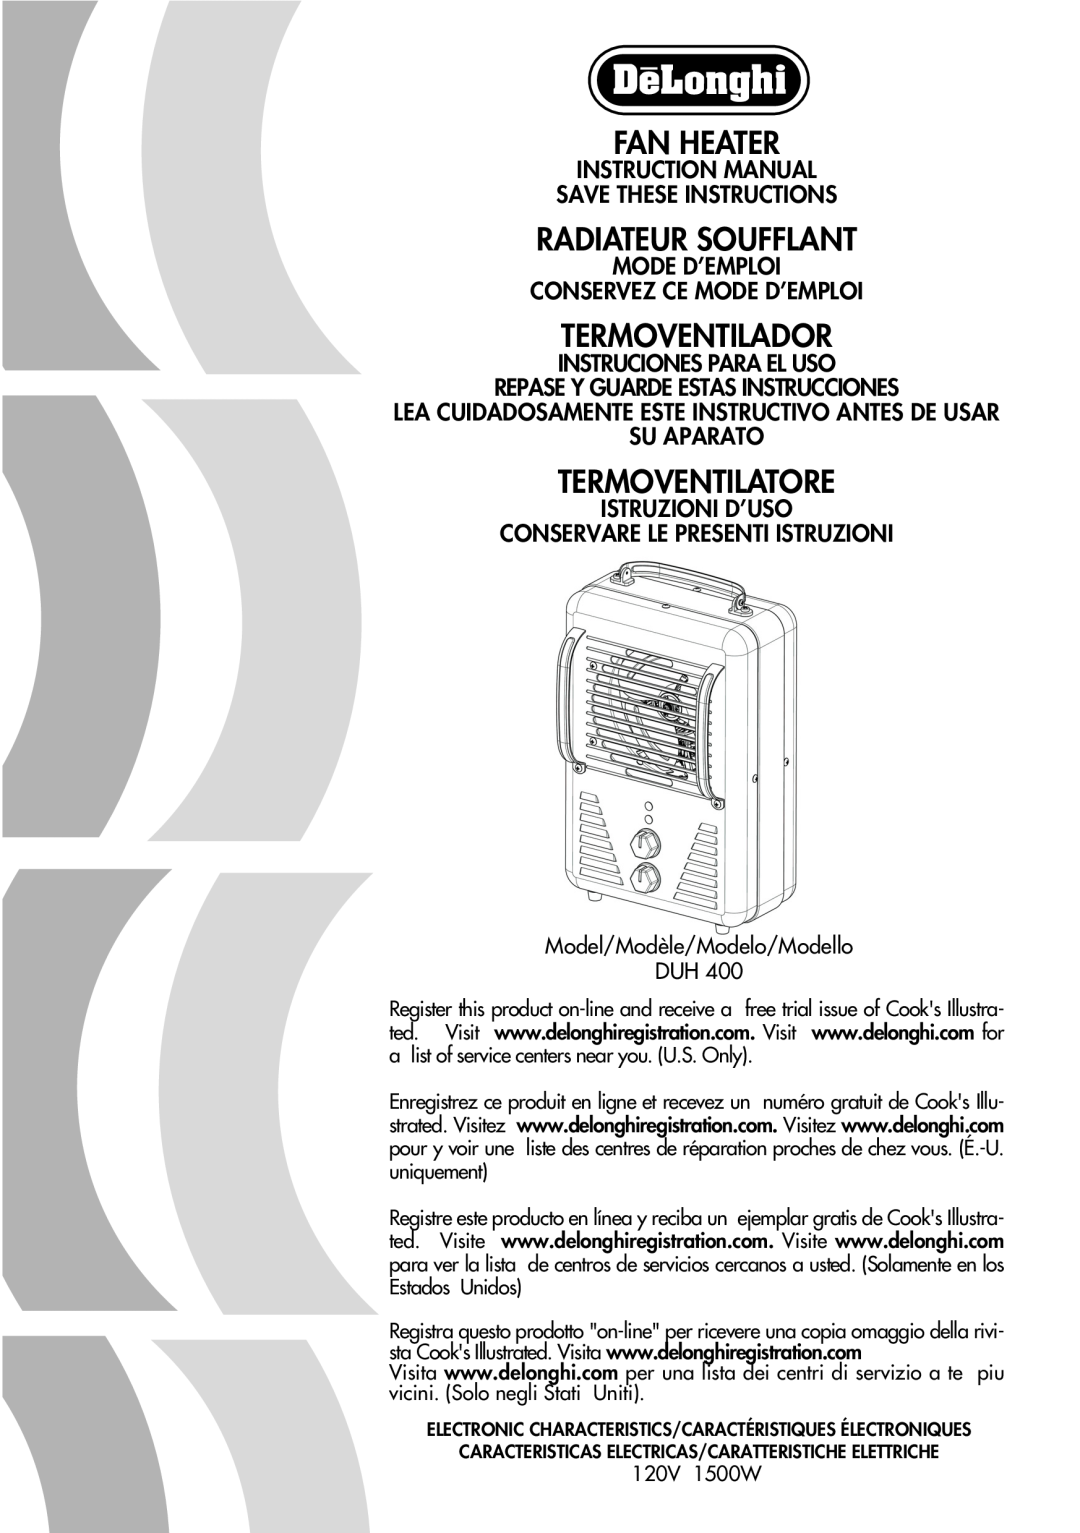 DeLonghi DUH400 instruction manual Fan Heater, Radiateur Soufflant, Termoventilador, Termoventilatore 